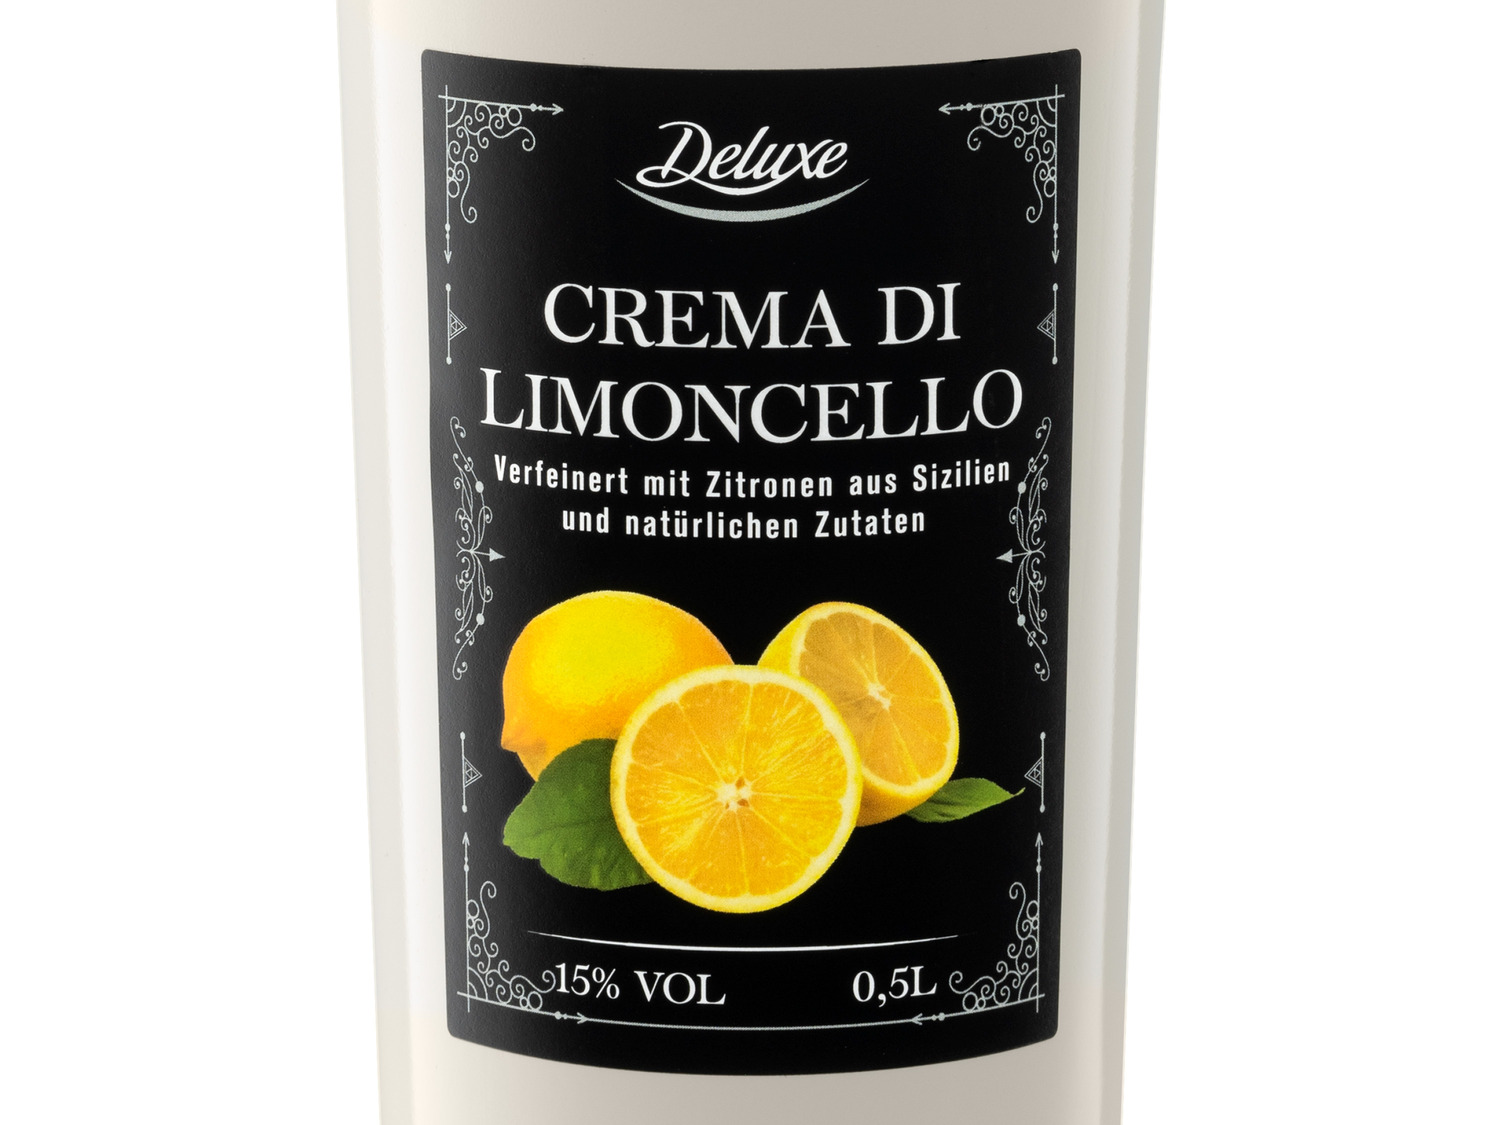 DELUXE Crema di Limoncello 15% Vol online kaufen | LIDL